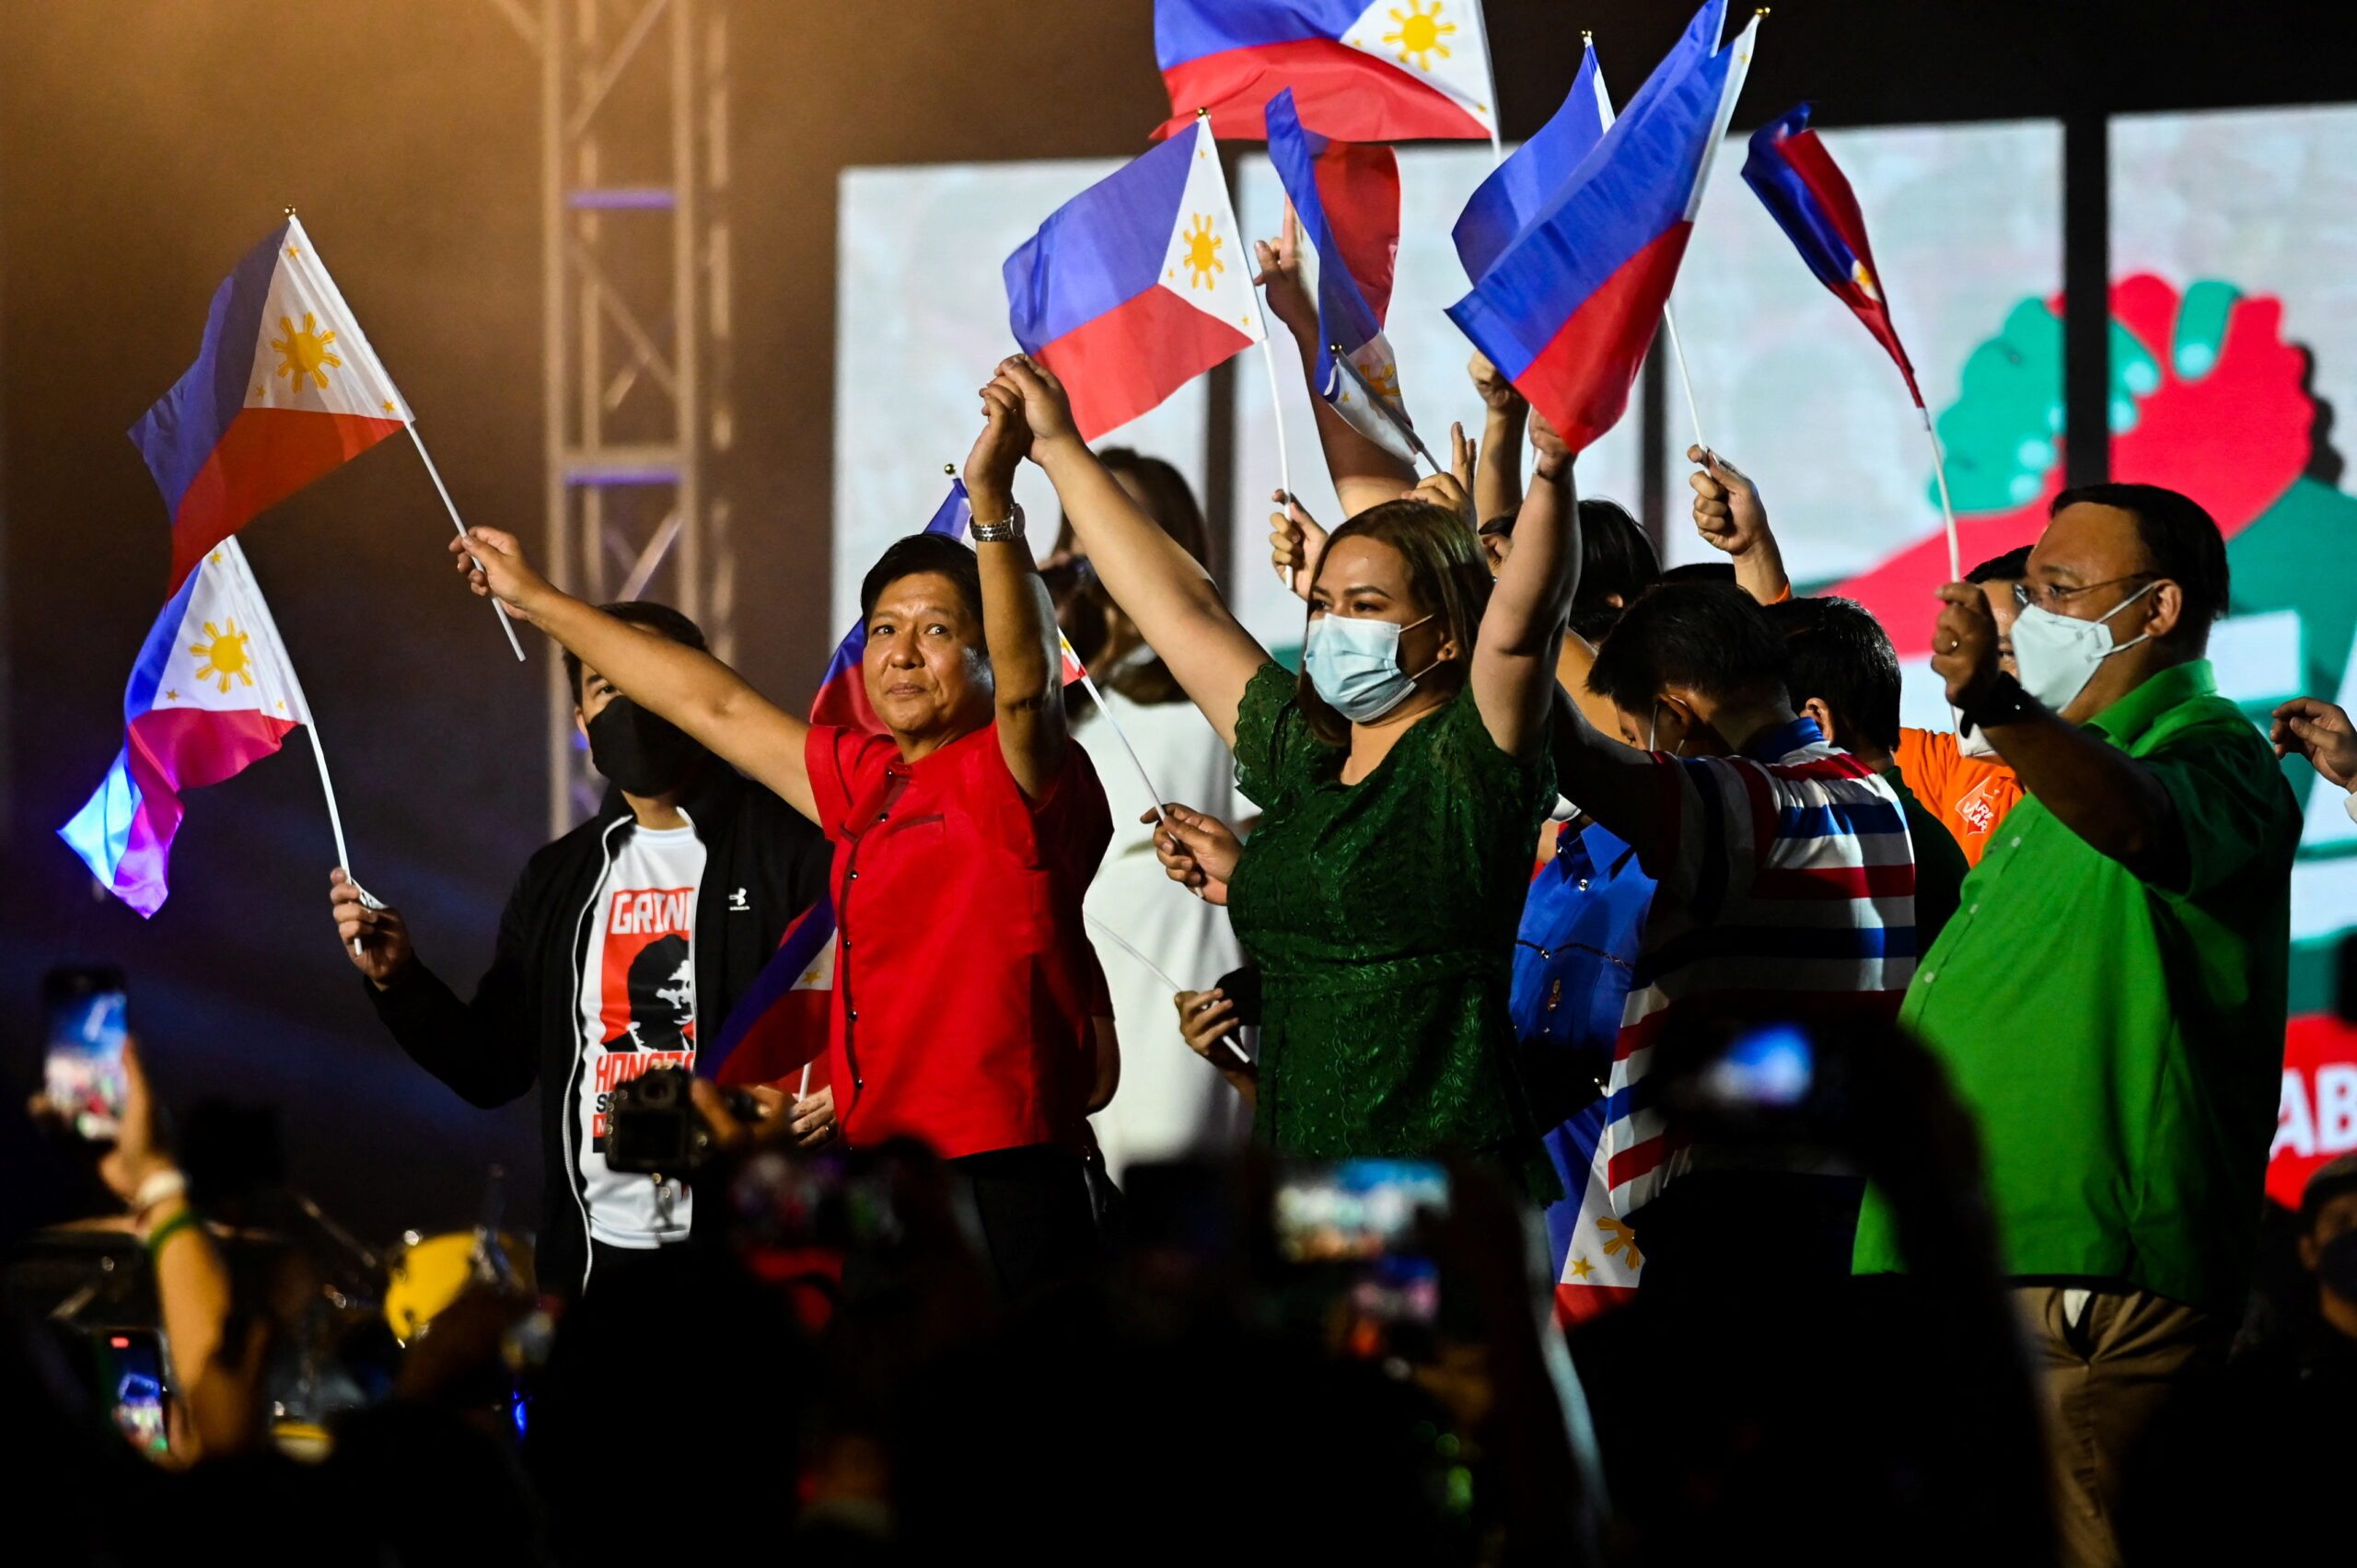 Marcos skips CNN debate, Sara Duterte not attending too